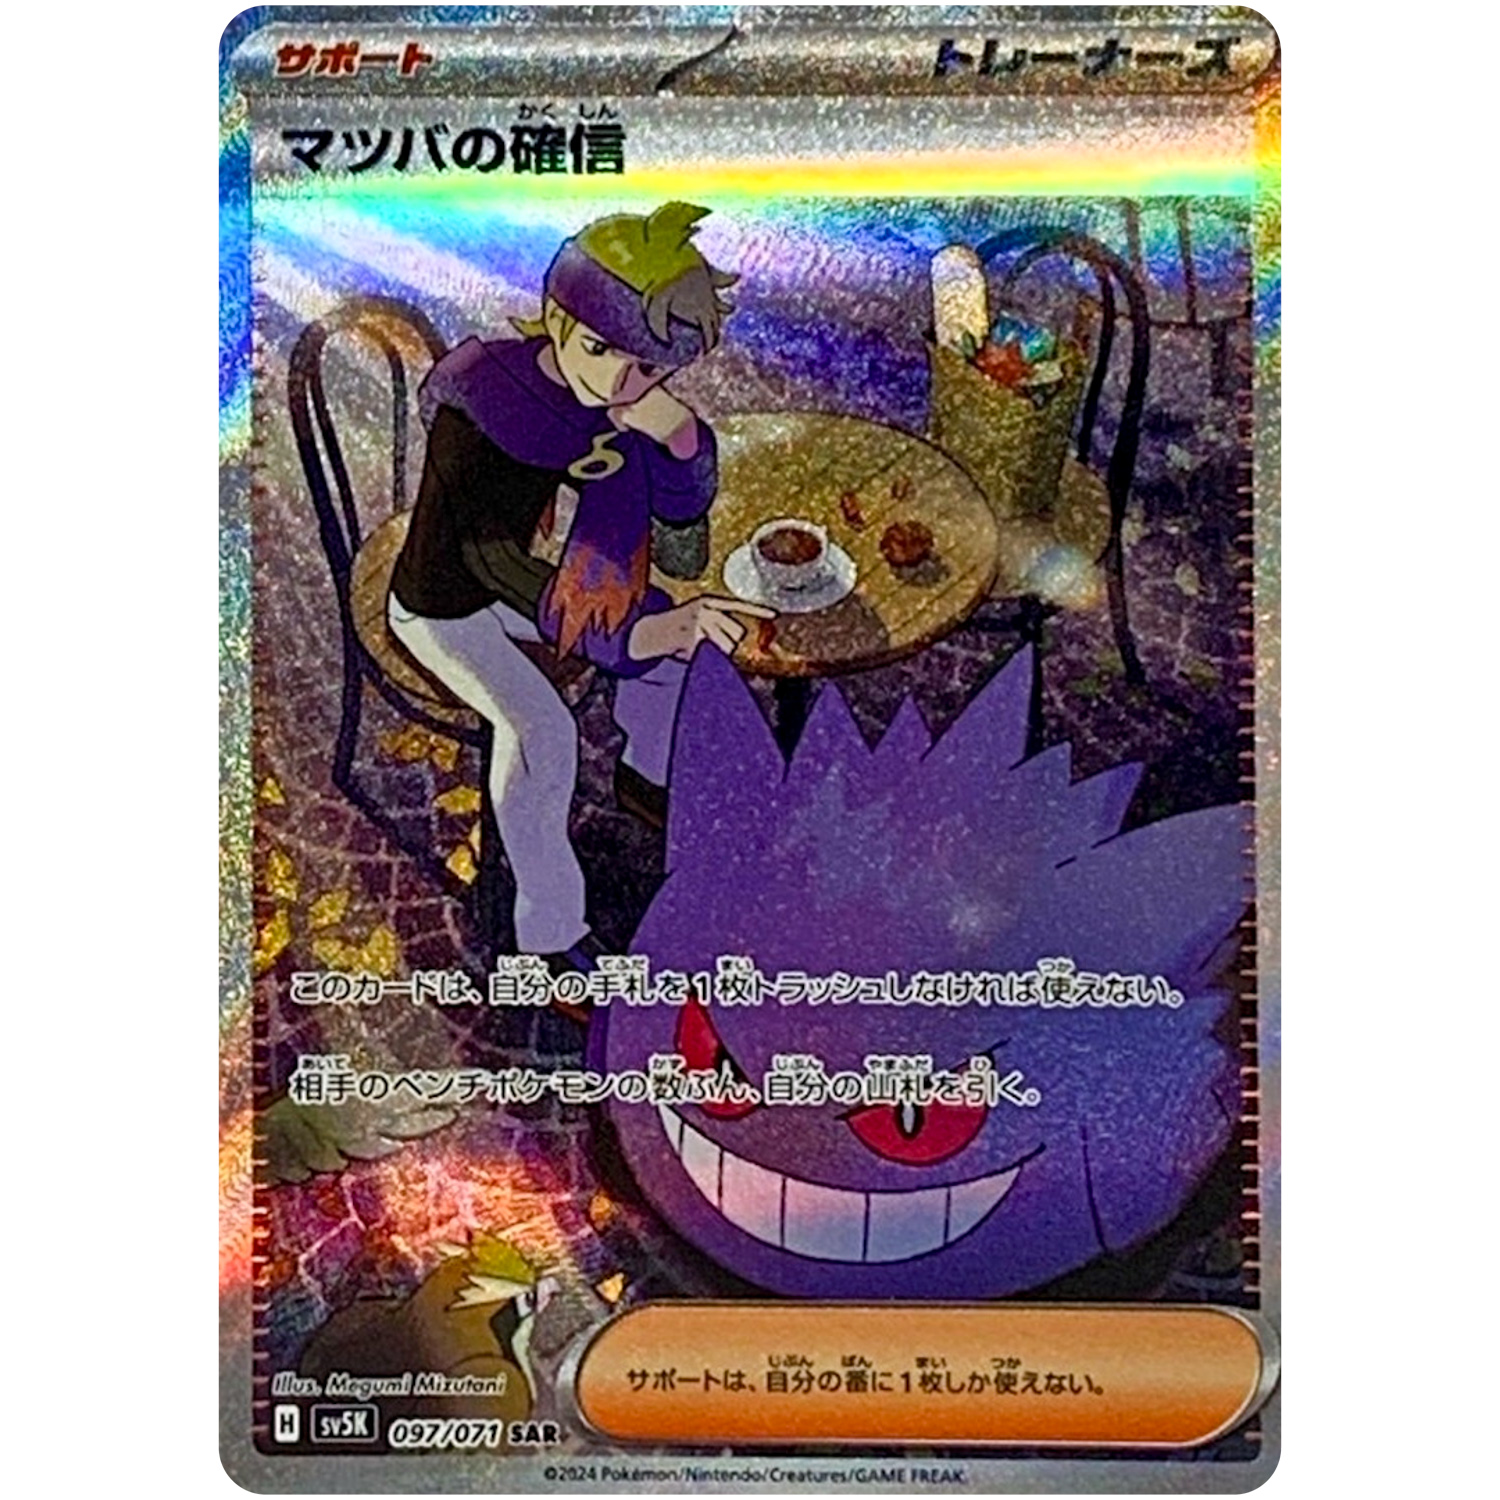 Morty's Confidence SAR 097/071 SV5K Wild Force - Pokemon Card 